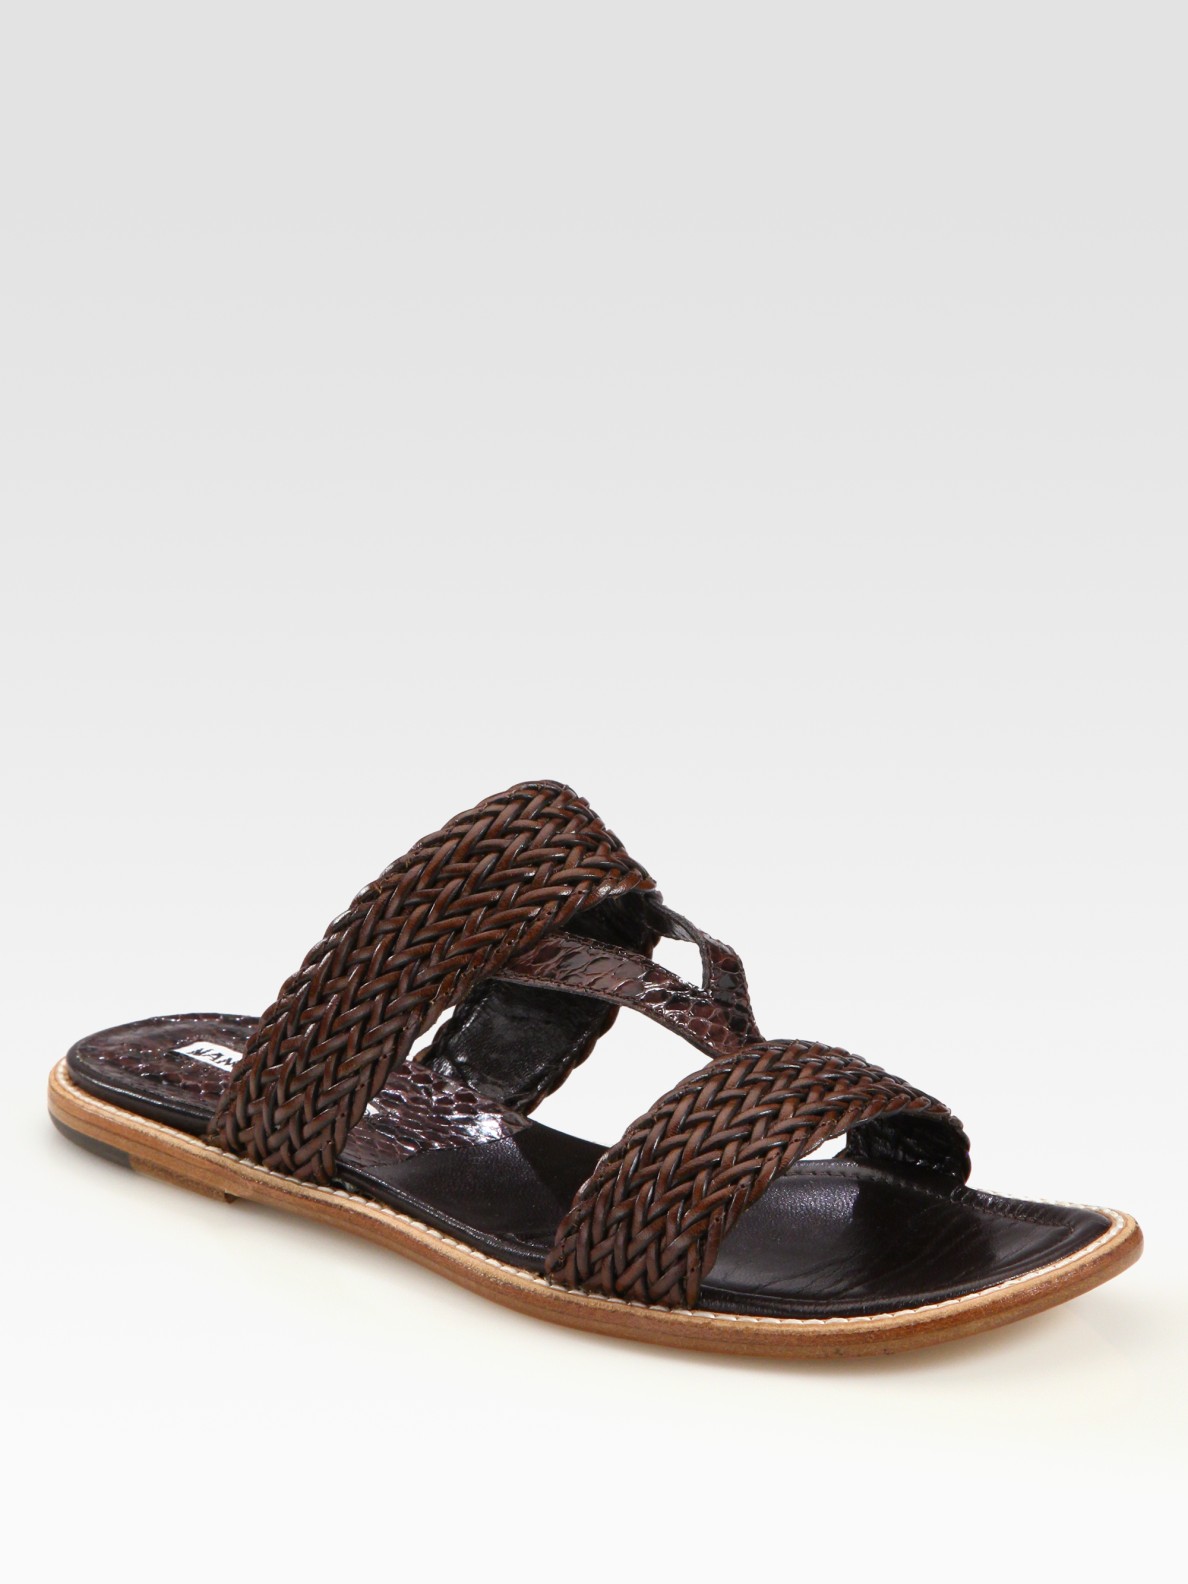 Manolo Blahnik Woven Leather Slide Sandals in Brown | Lyst